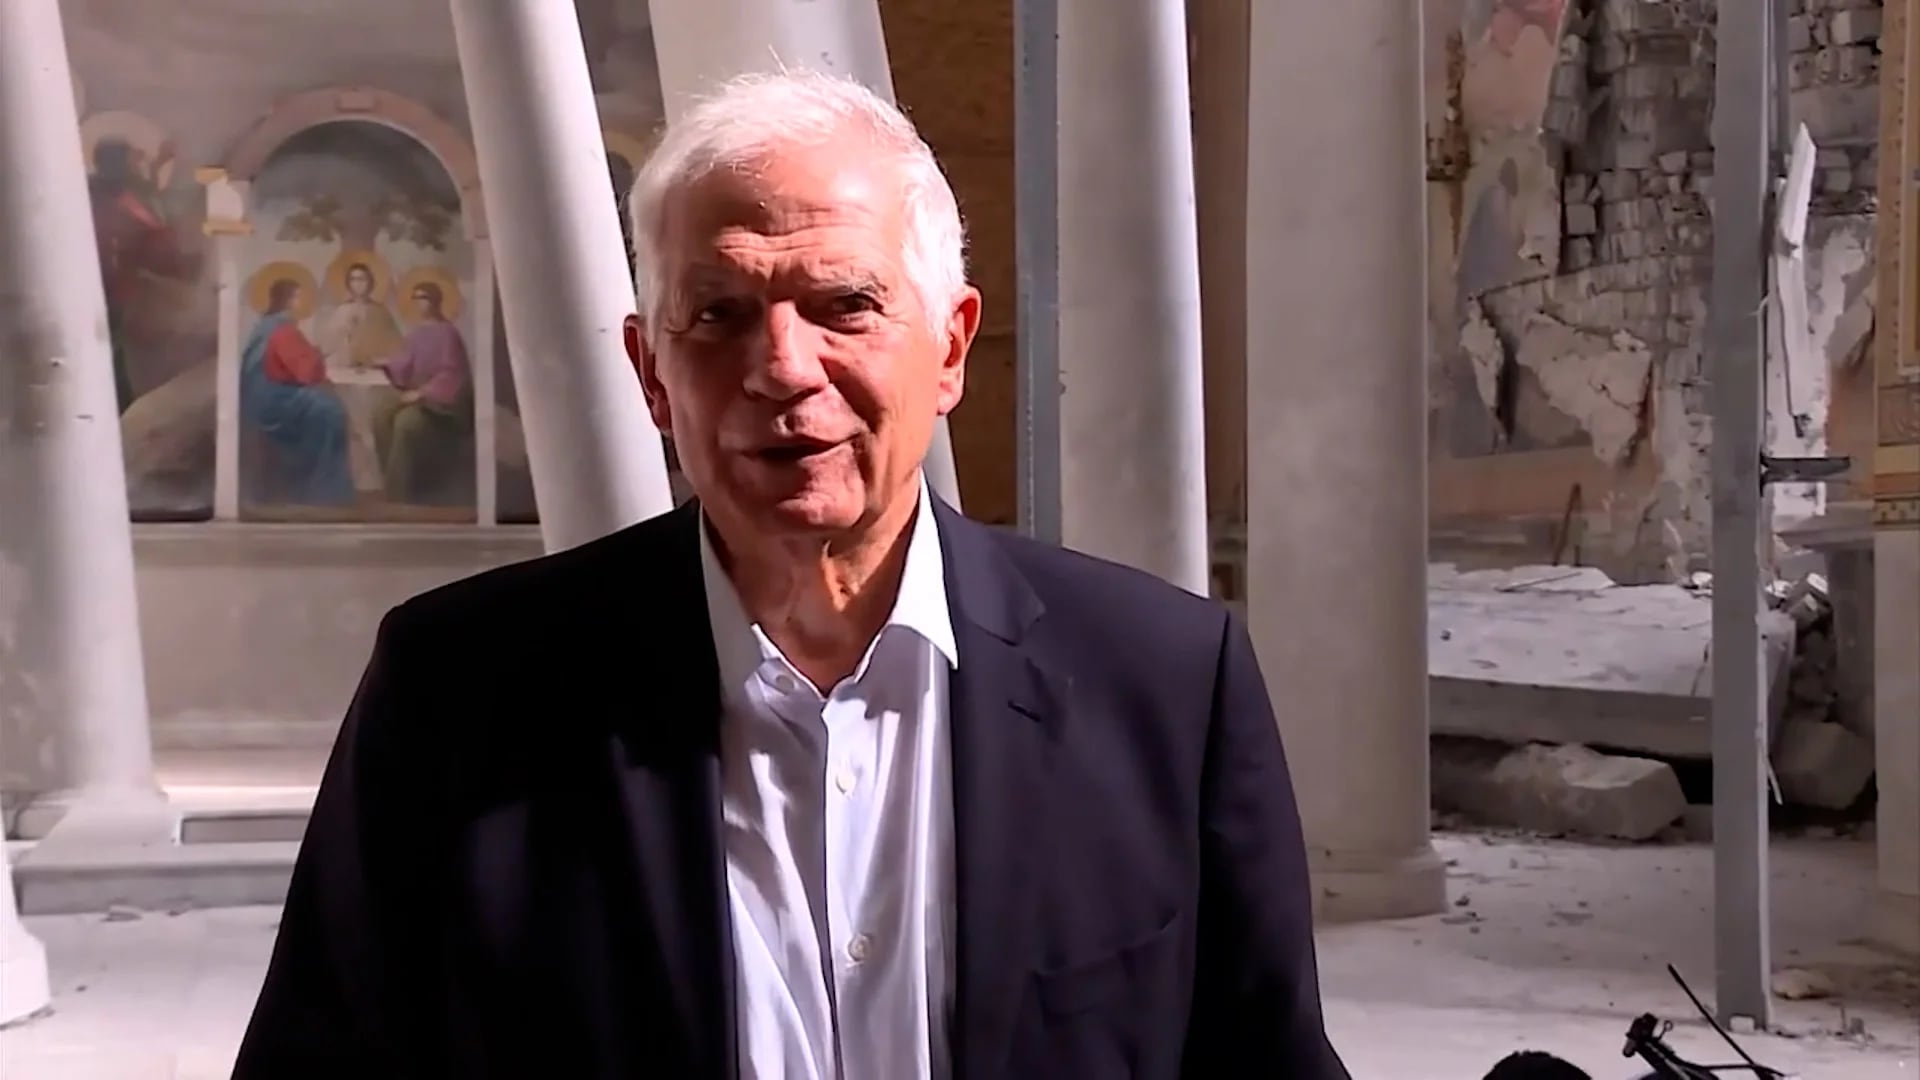 Josep Borrell viajó por sorpresa a Ucrania y visitó la catedral de la Transfiguración de Odesa